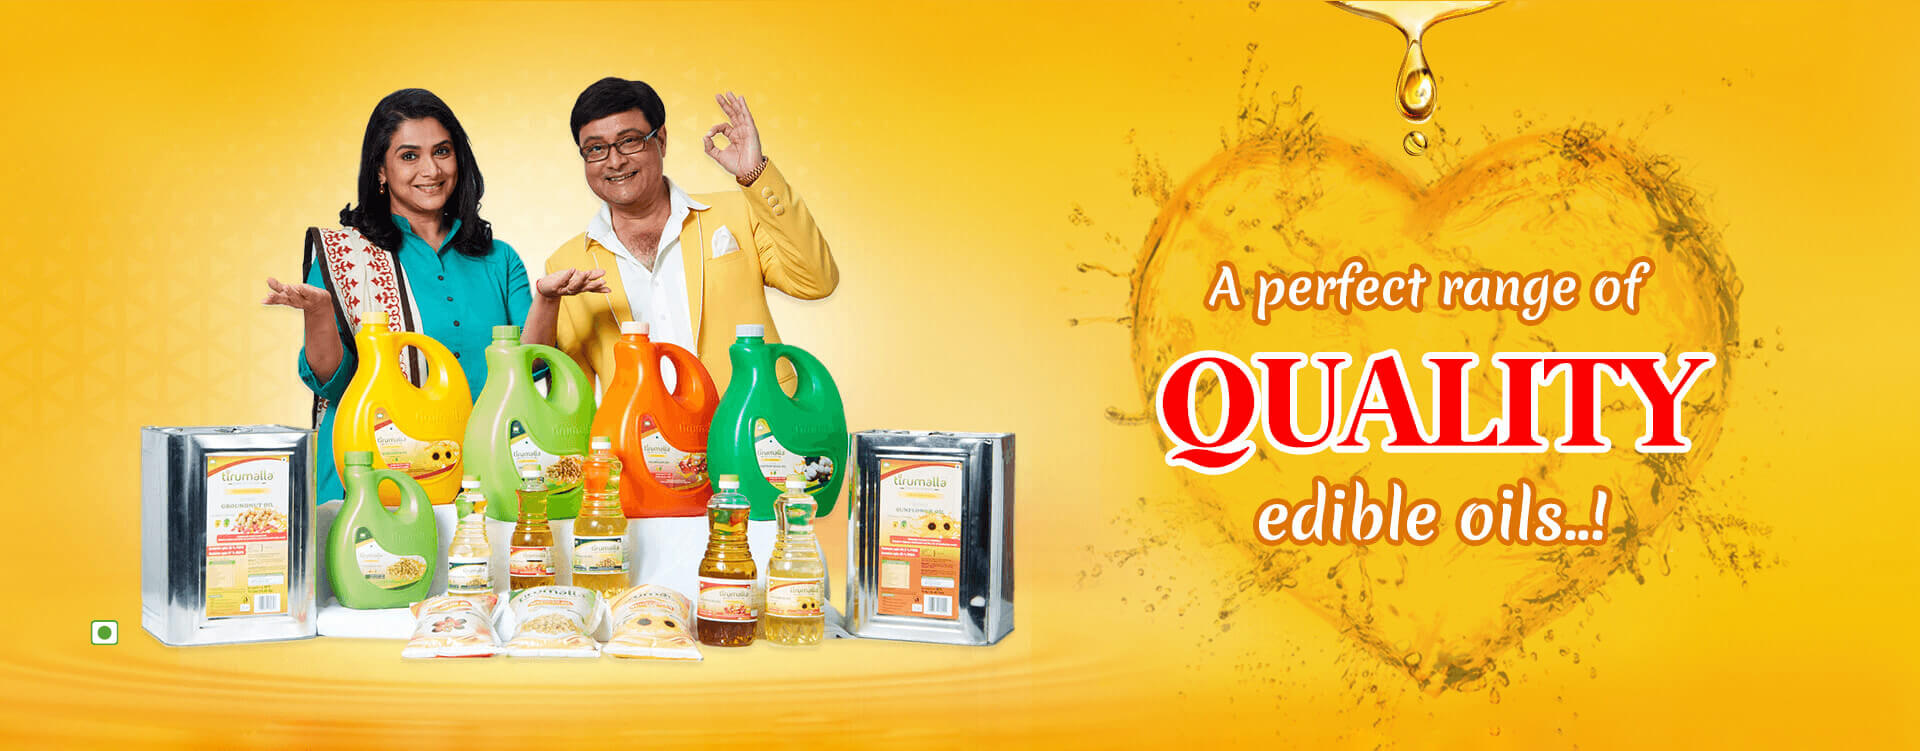 Tirumalla Edible Oil - Top Cooking Oil Brand In India